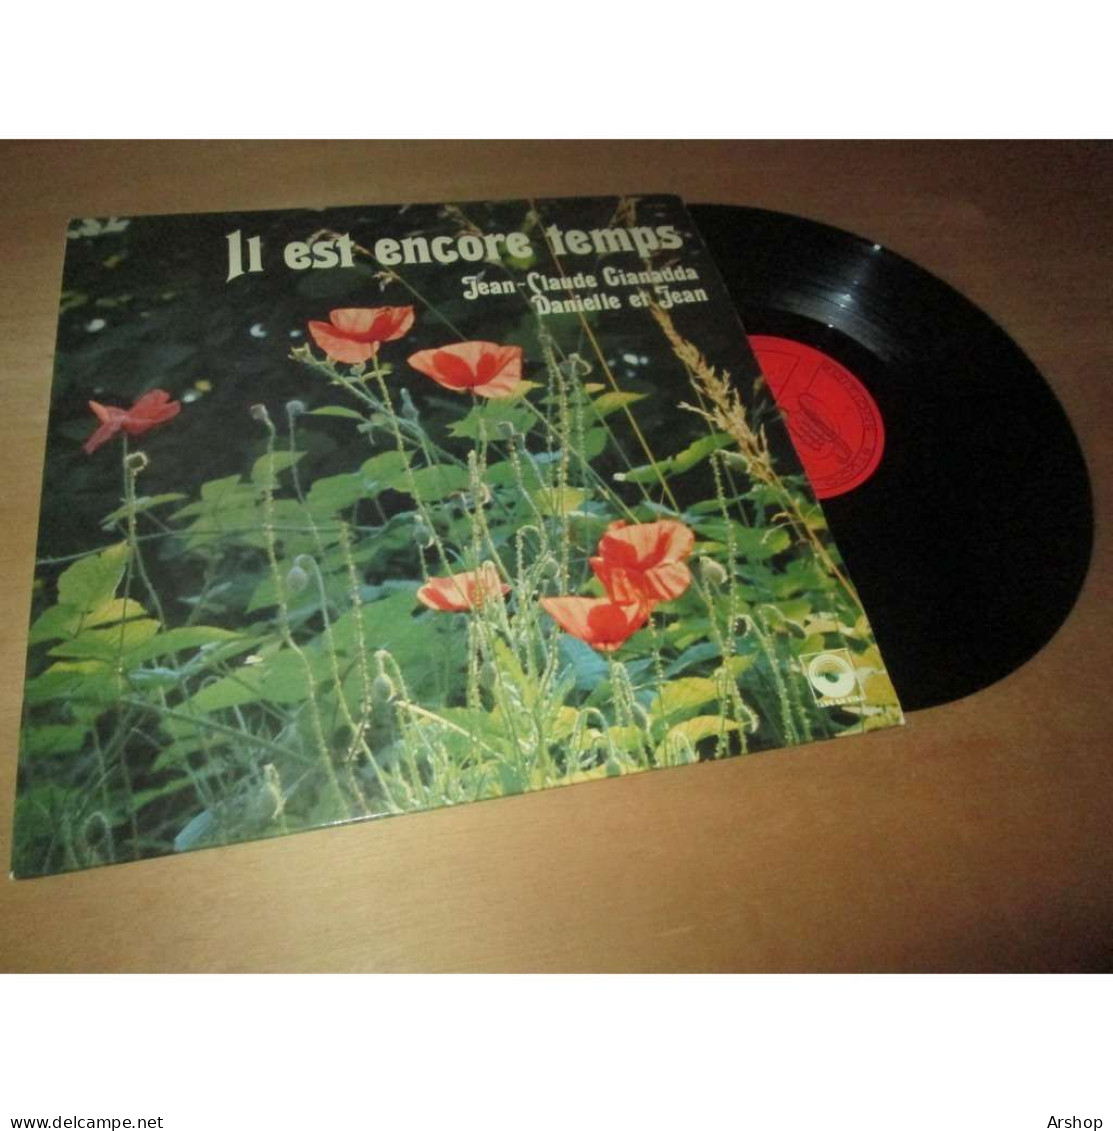 JEAN-CLAUDE GIANADDA Il Est Encore Temps - STUDIO SM 30995 France 1980 - Other - French Music